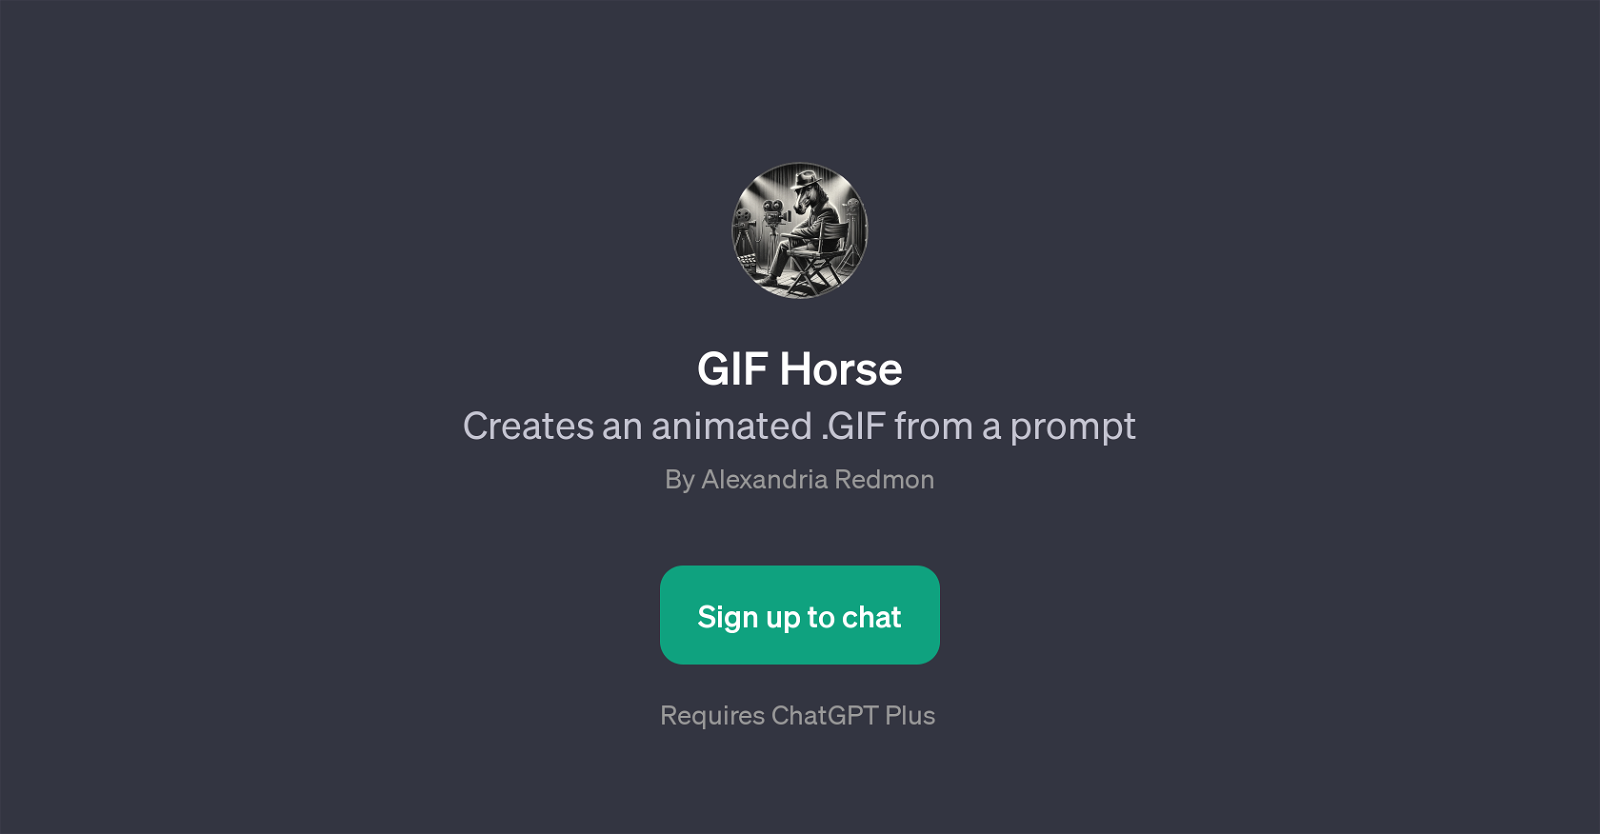 GIF Horse website